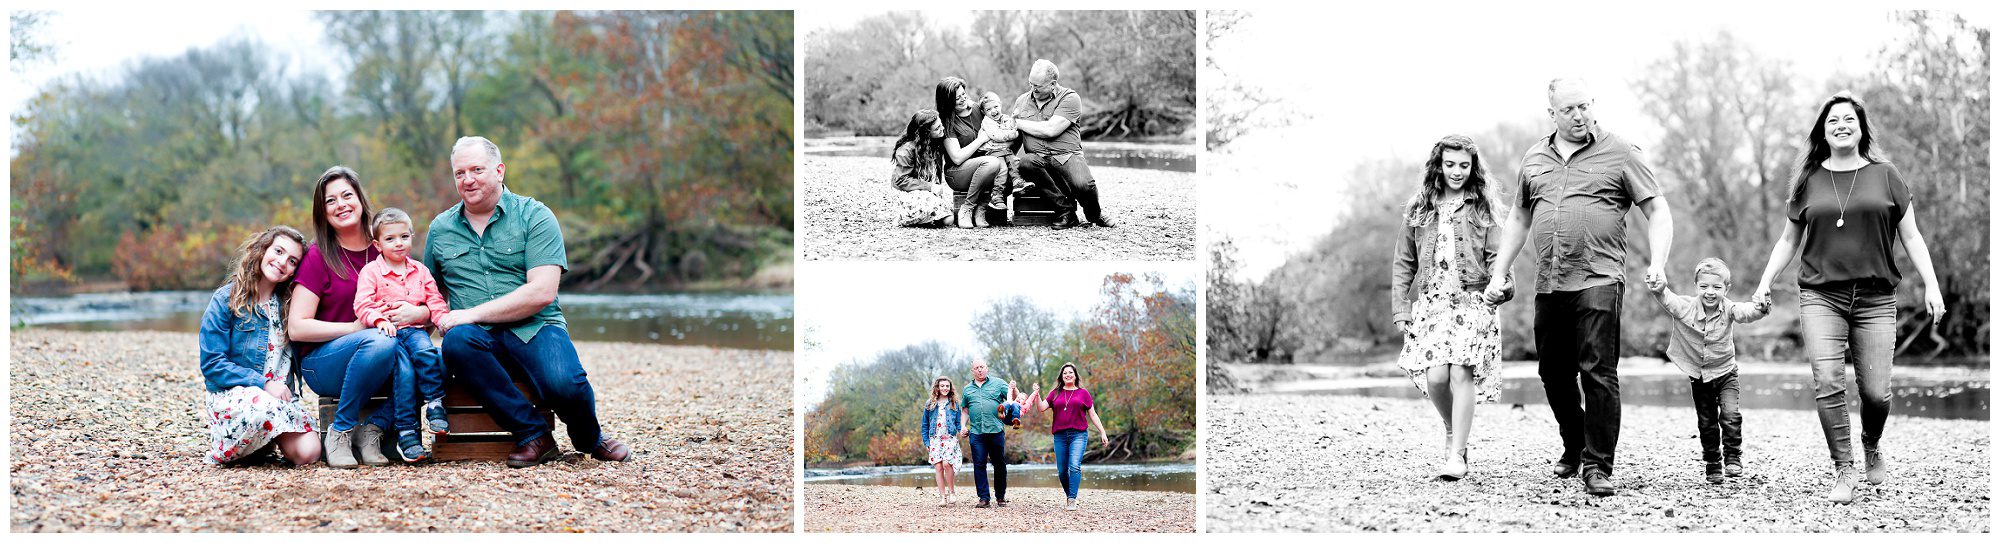 charlottesville family photographer portraits pictures fall autumn photography fluvanna palmyra sandy beach.